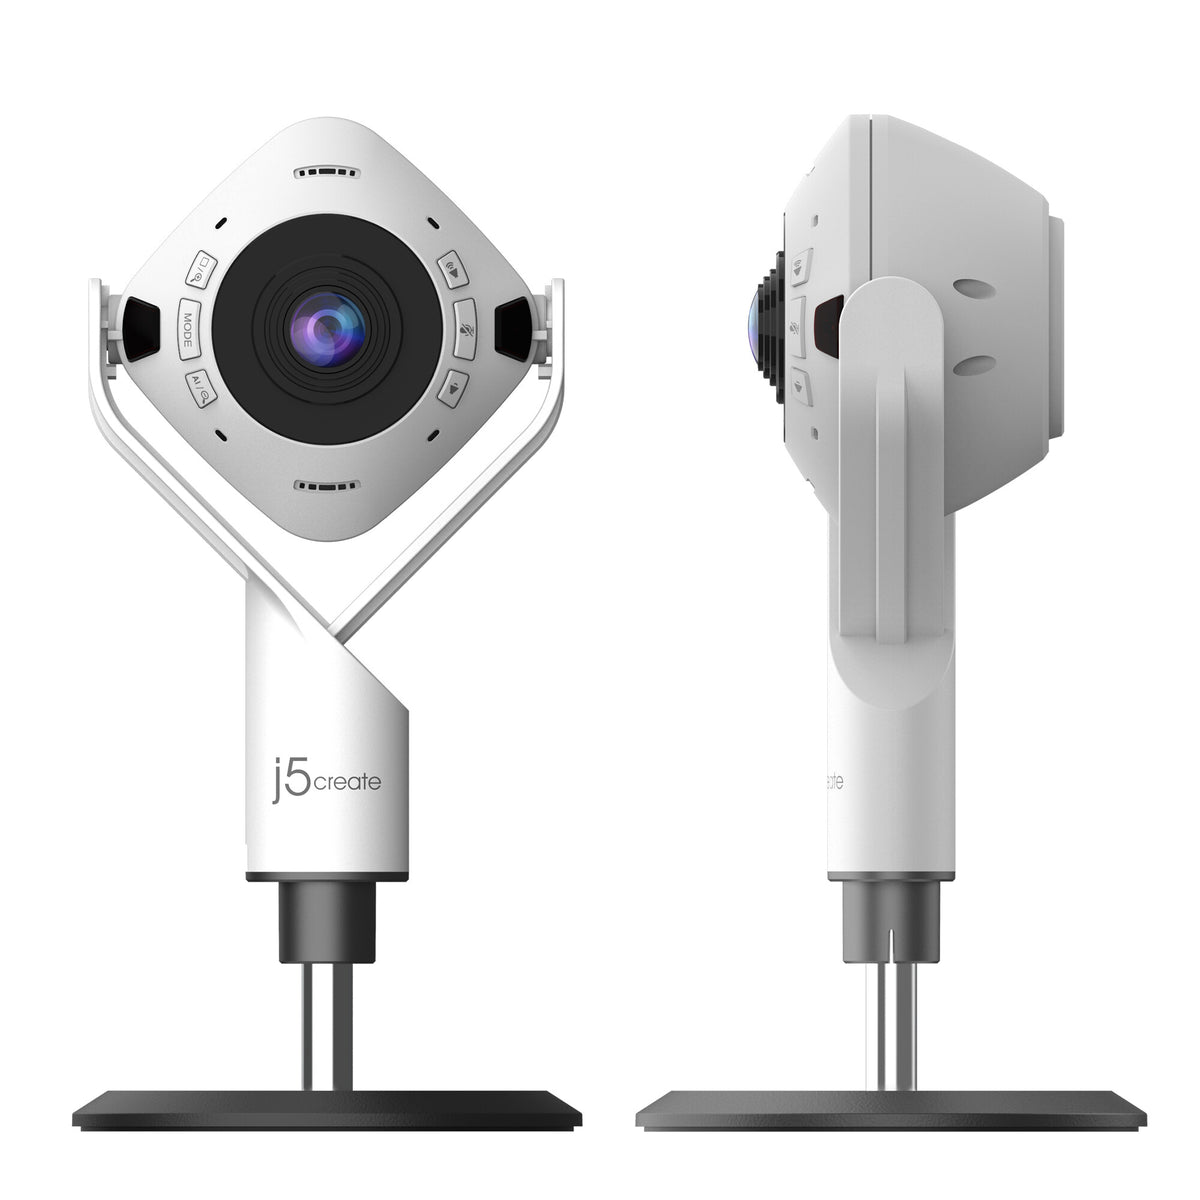 j5create JVU368 - USB Wired 360° AI-Powered 1080p Webcam with Speakerphone